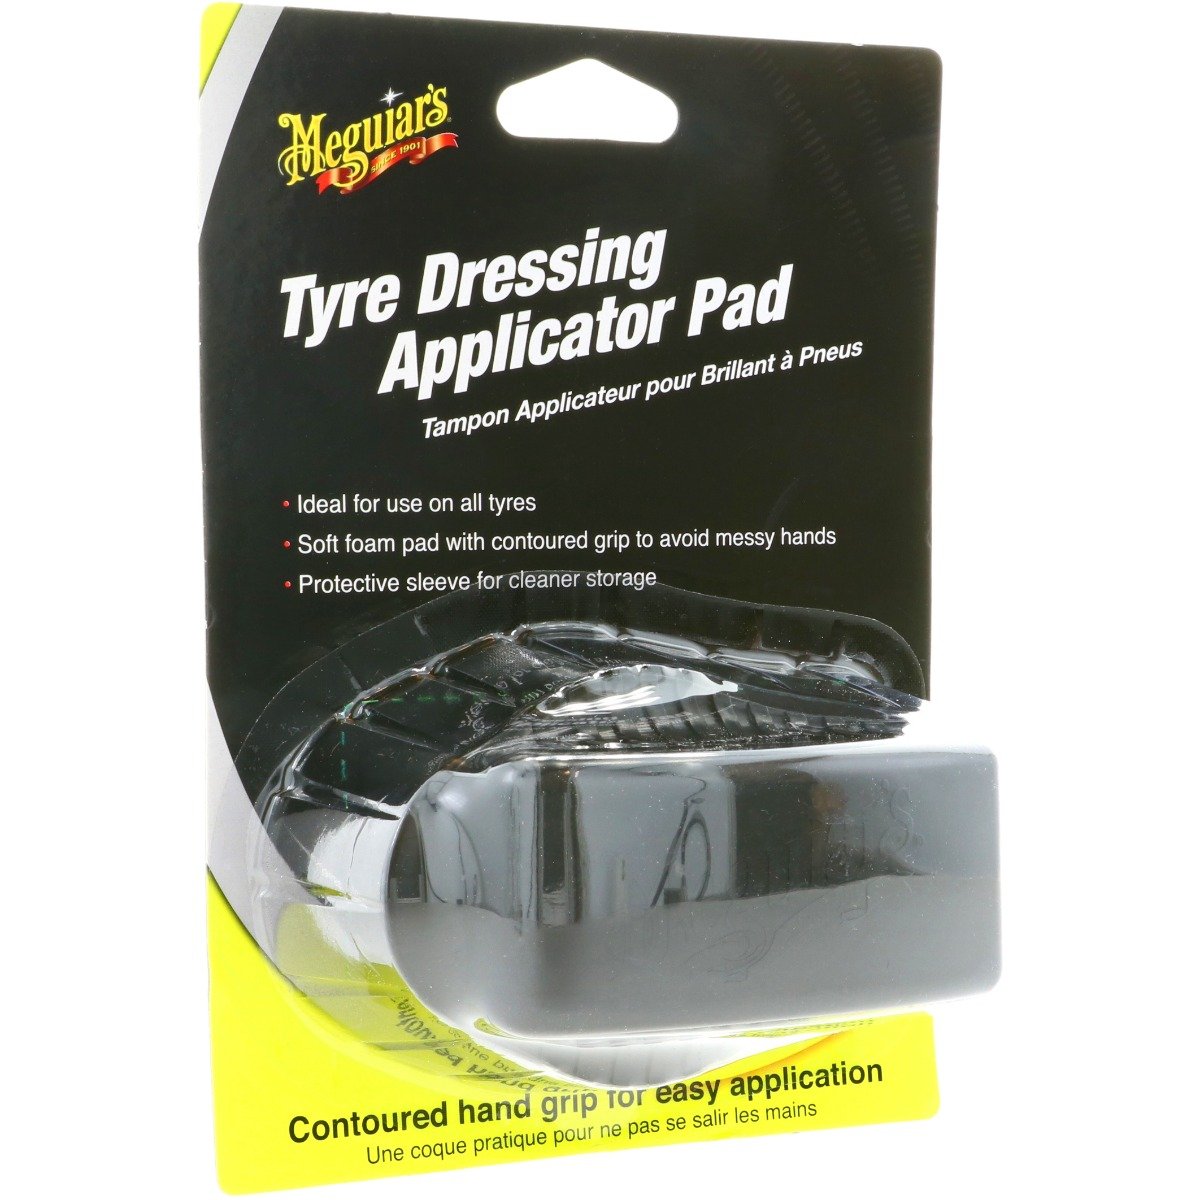 Tyre Dressing Applicator Pad